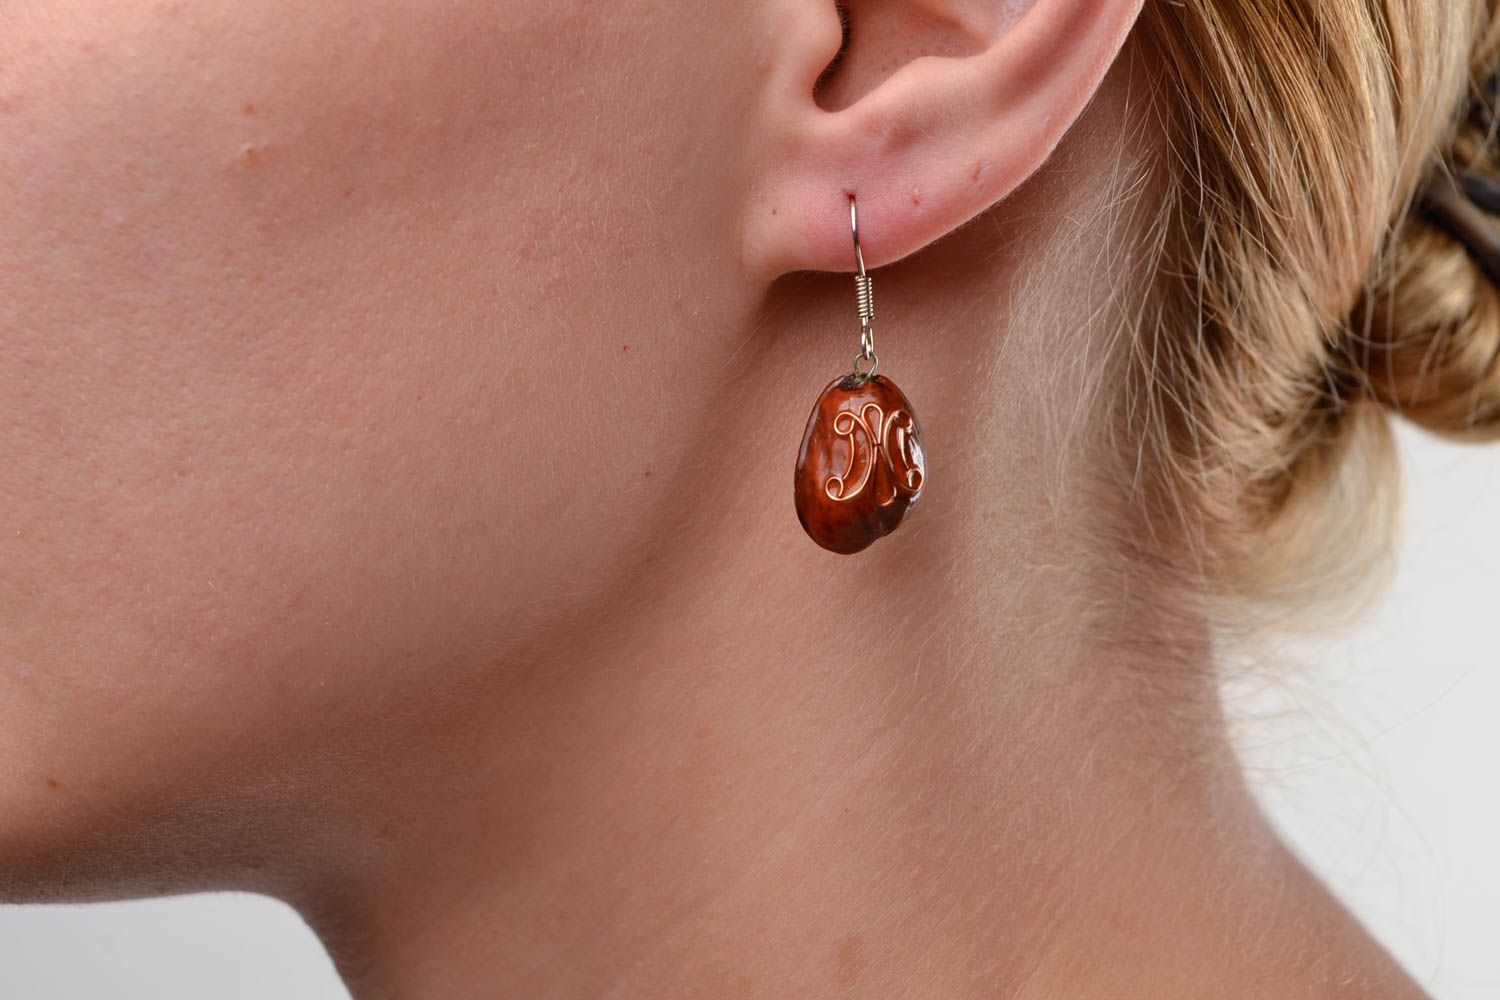 Designer earrings wooden jewelry handmade jewelry wood earrings gifts for her photo 1